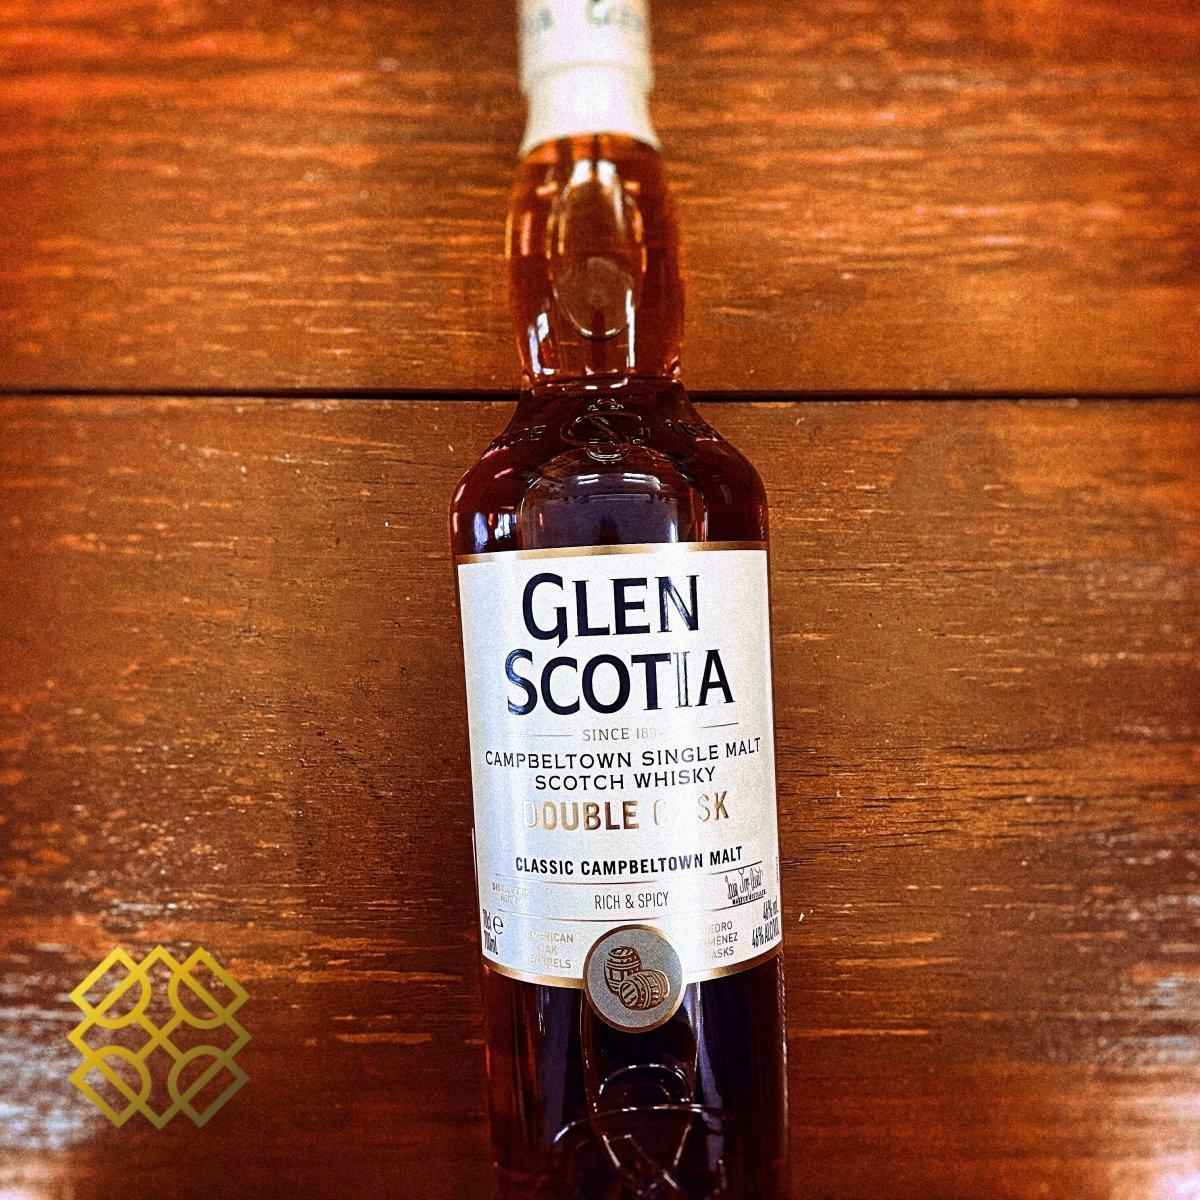 Glen Scotia - Double Cask, Classic Campbeltown Malt, 46%  Type : Single malt whisky 威士忌